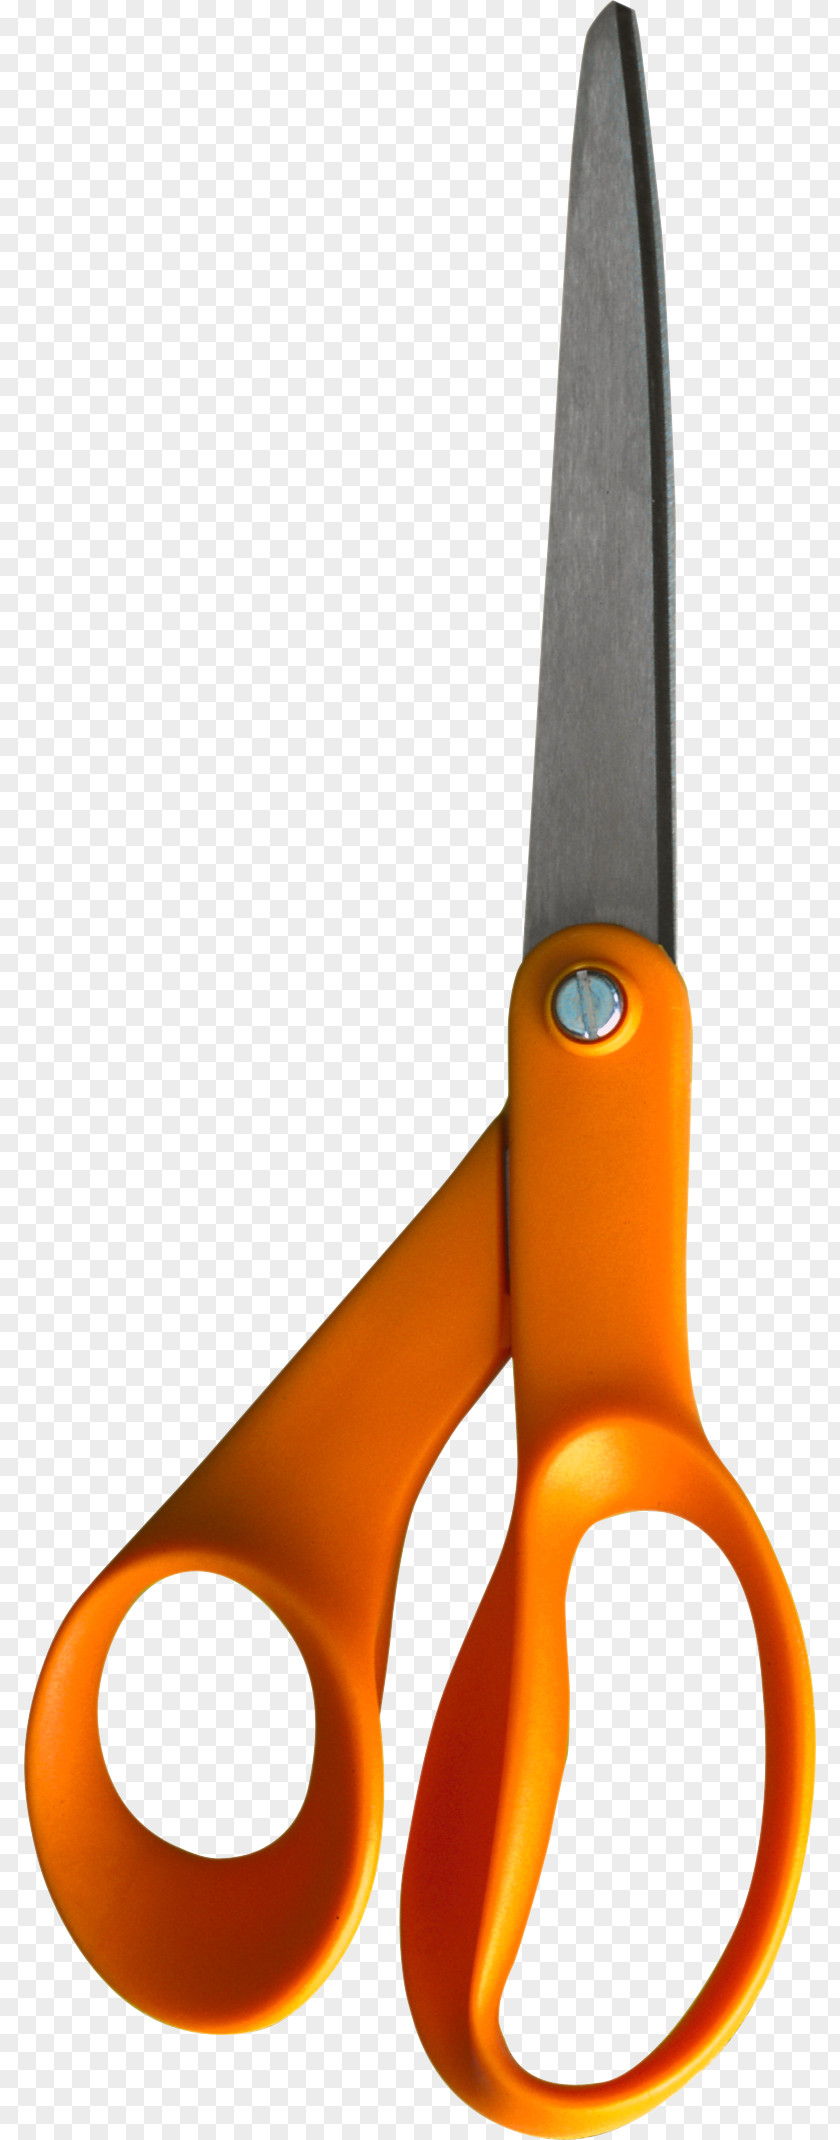 Orange Scissors Image Download Clip Art PNG